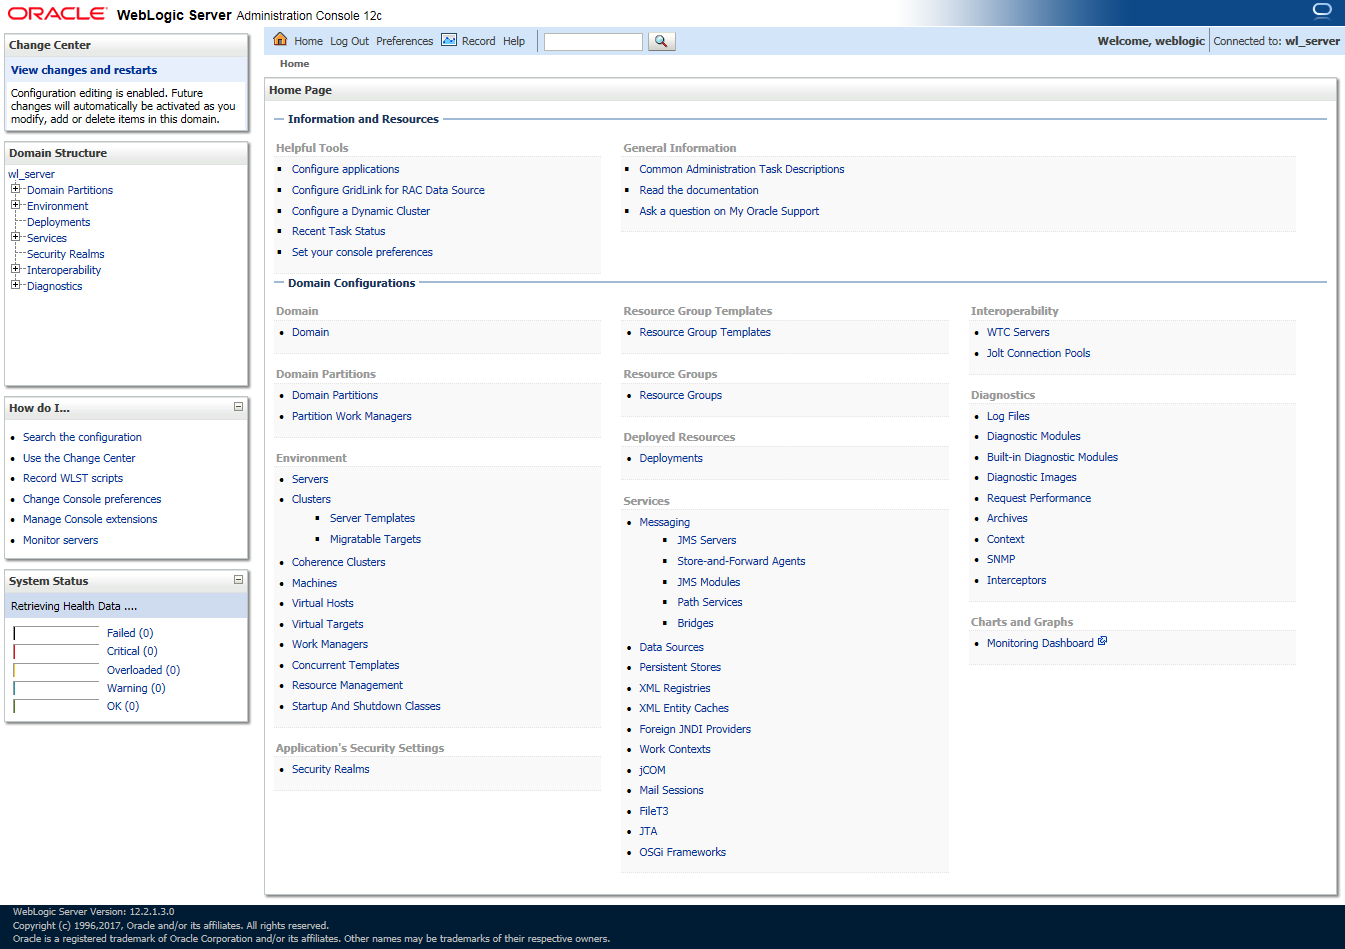 Oracle WebLogic Server Administration Console 12c - Dashboard